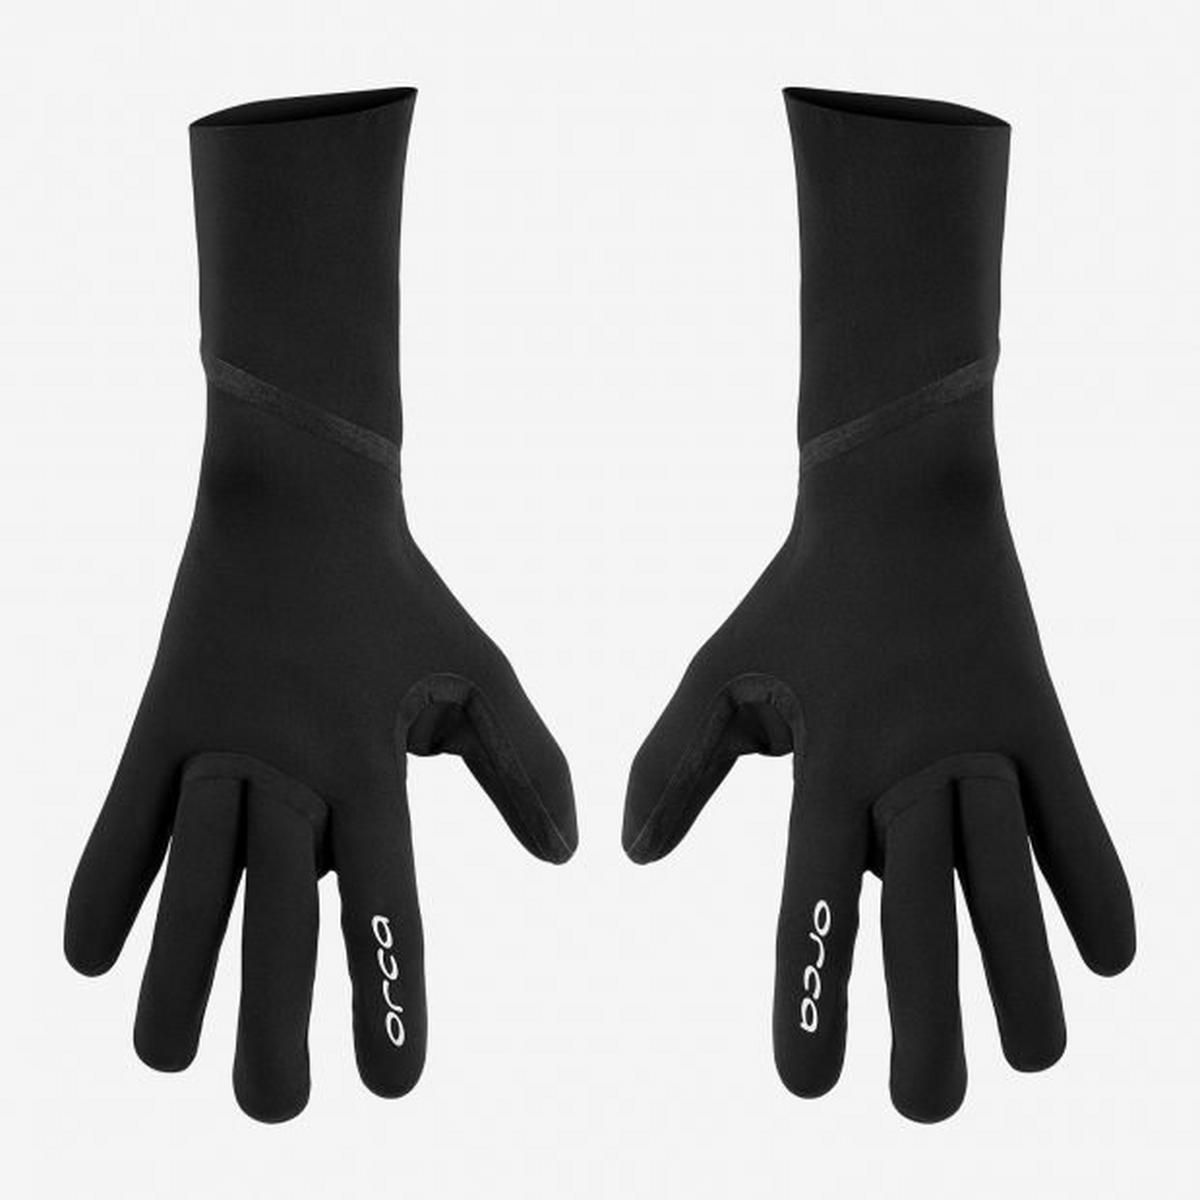 Orca Men's Open Water Core Gloves